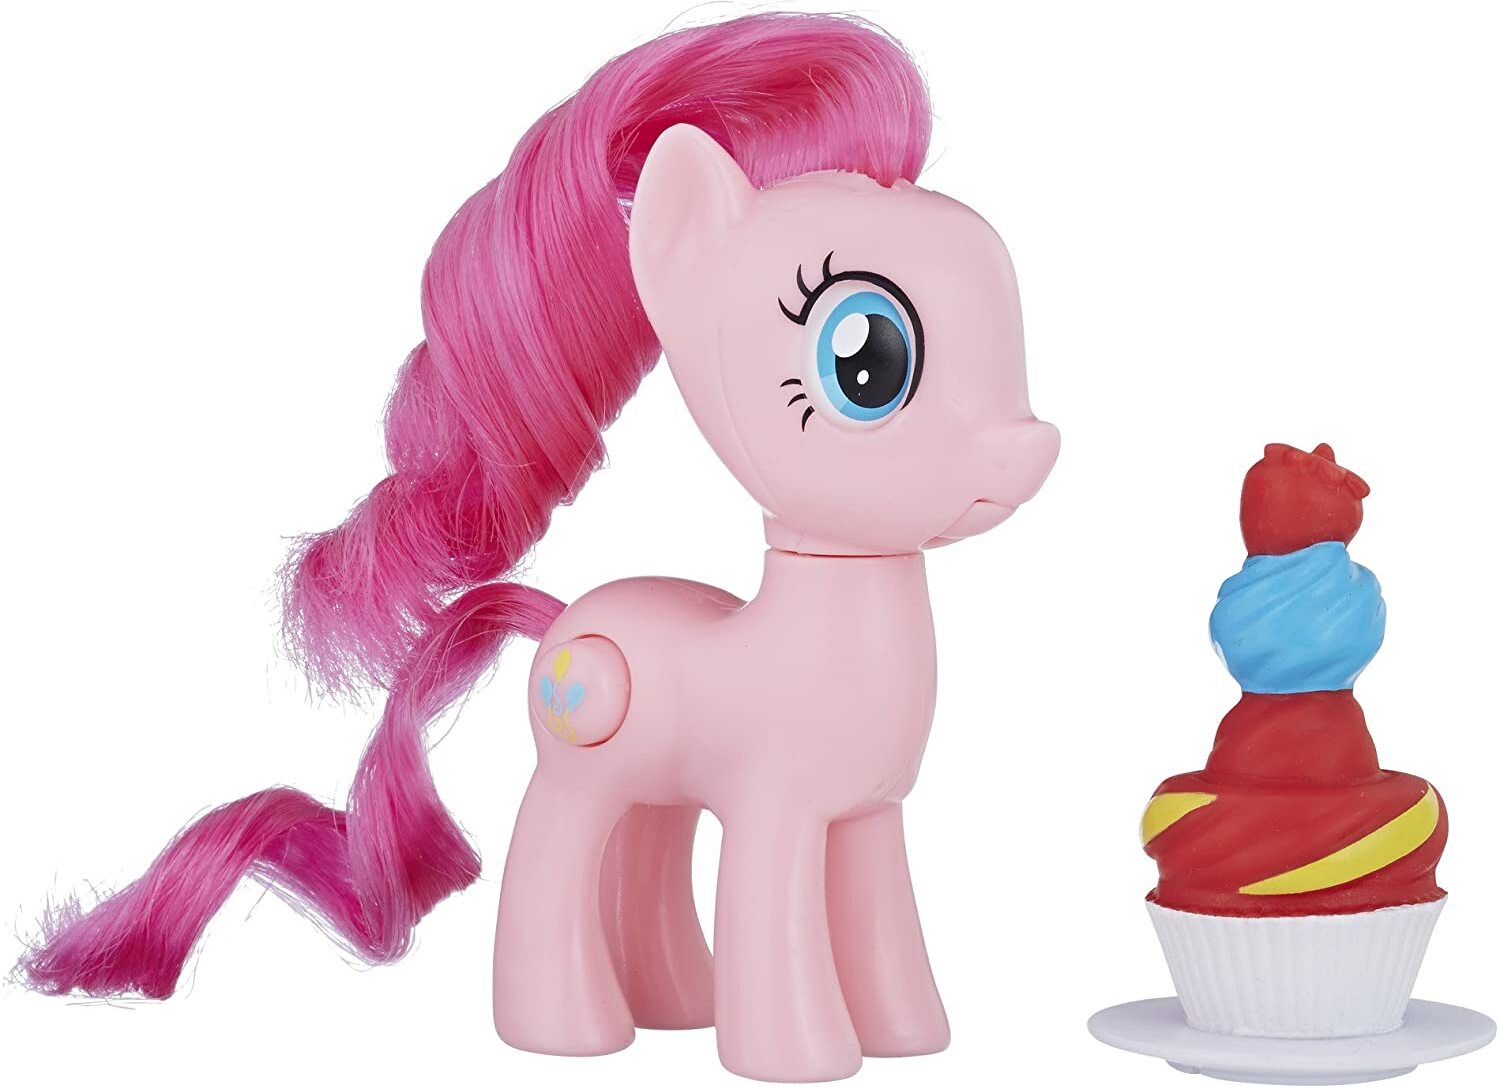 MY Little Pony Friendship is Magic Pinkie Pie E2566/E0186